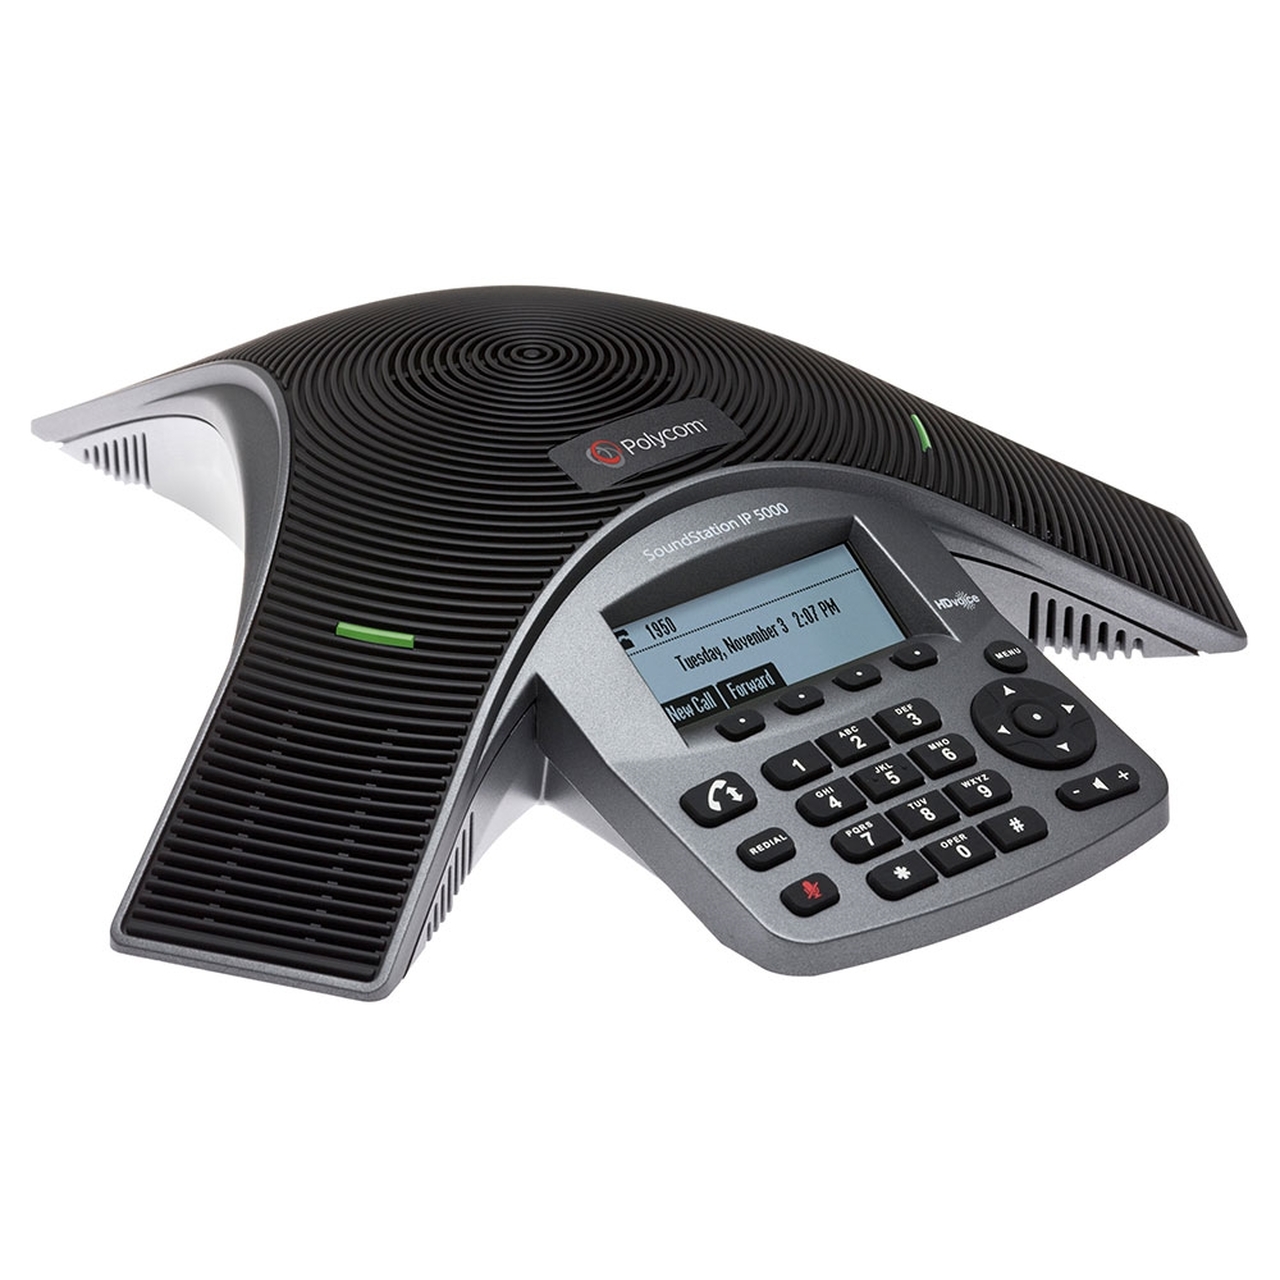 Polycom Soundstation Ip 5000 Conference Voip Phone Pn: 2200-30900-025 2201-30900-001